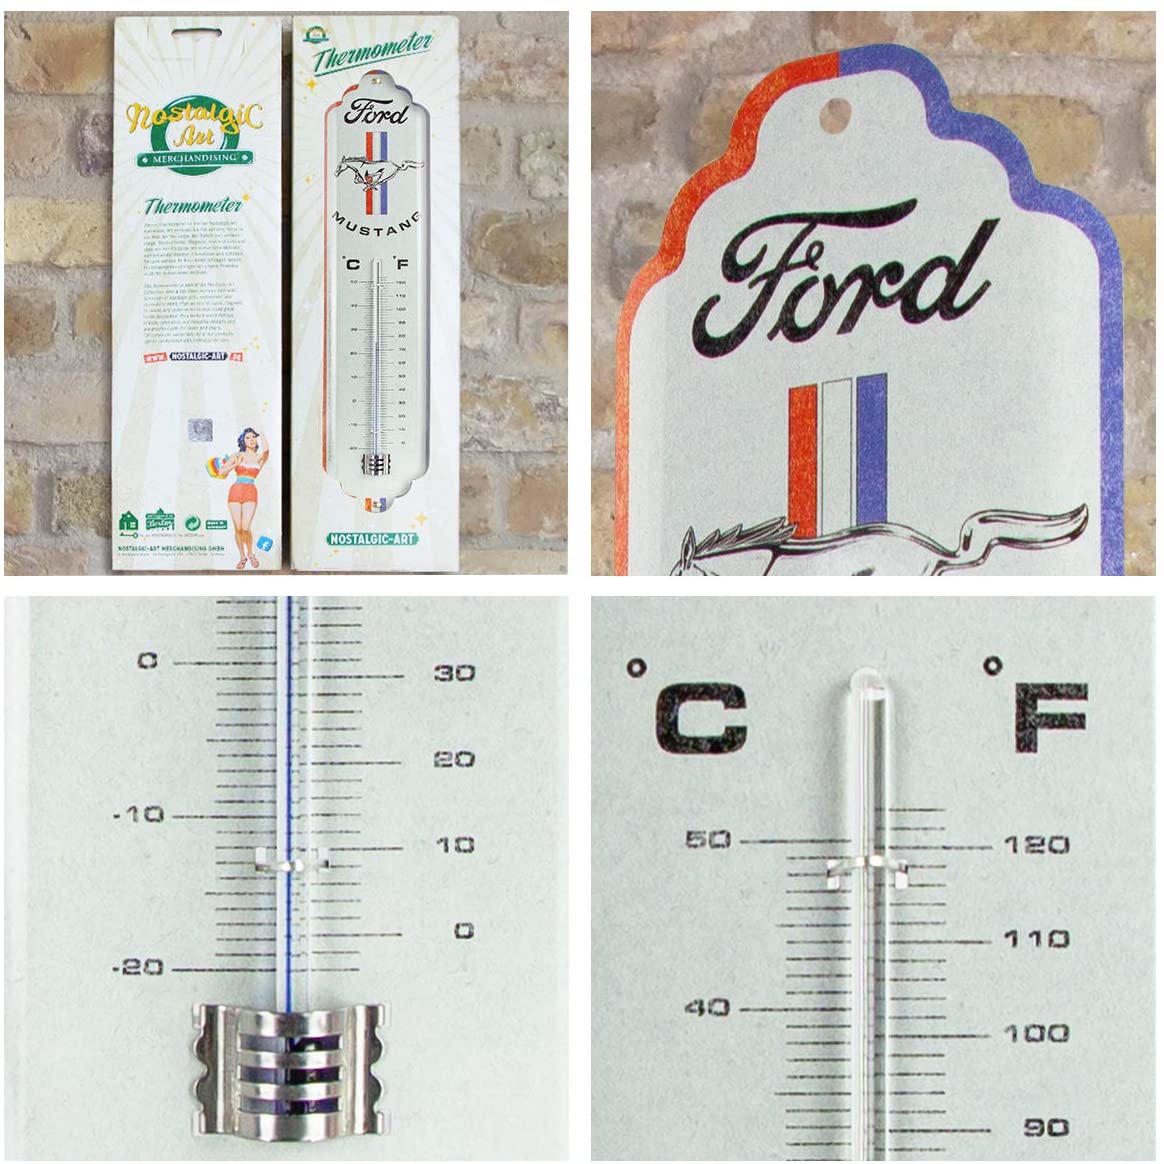 80338c-thermometre-murale-ford-mustang-nostalgic-art-vintage-retro